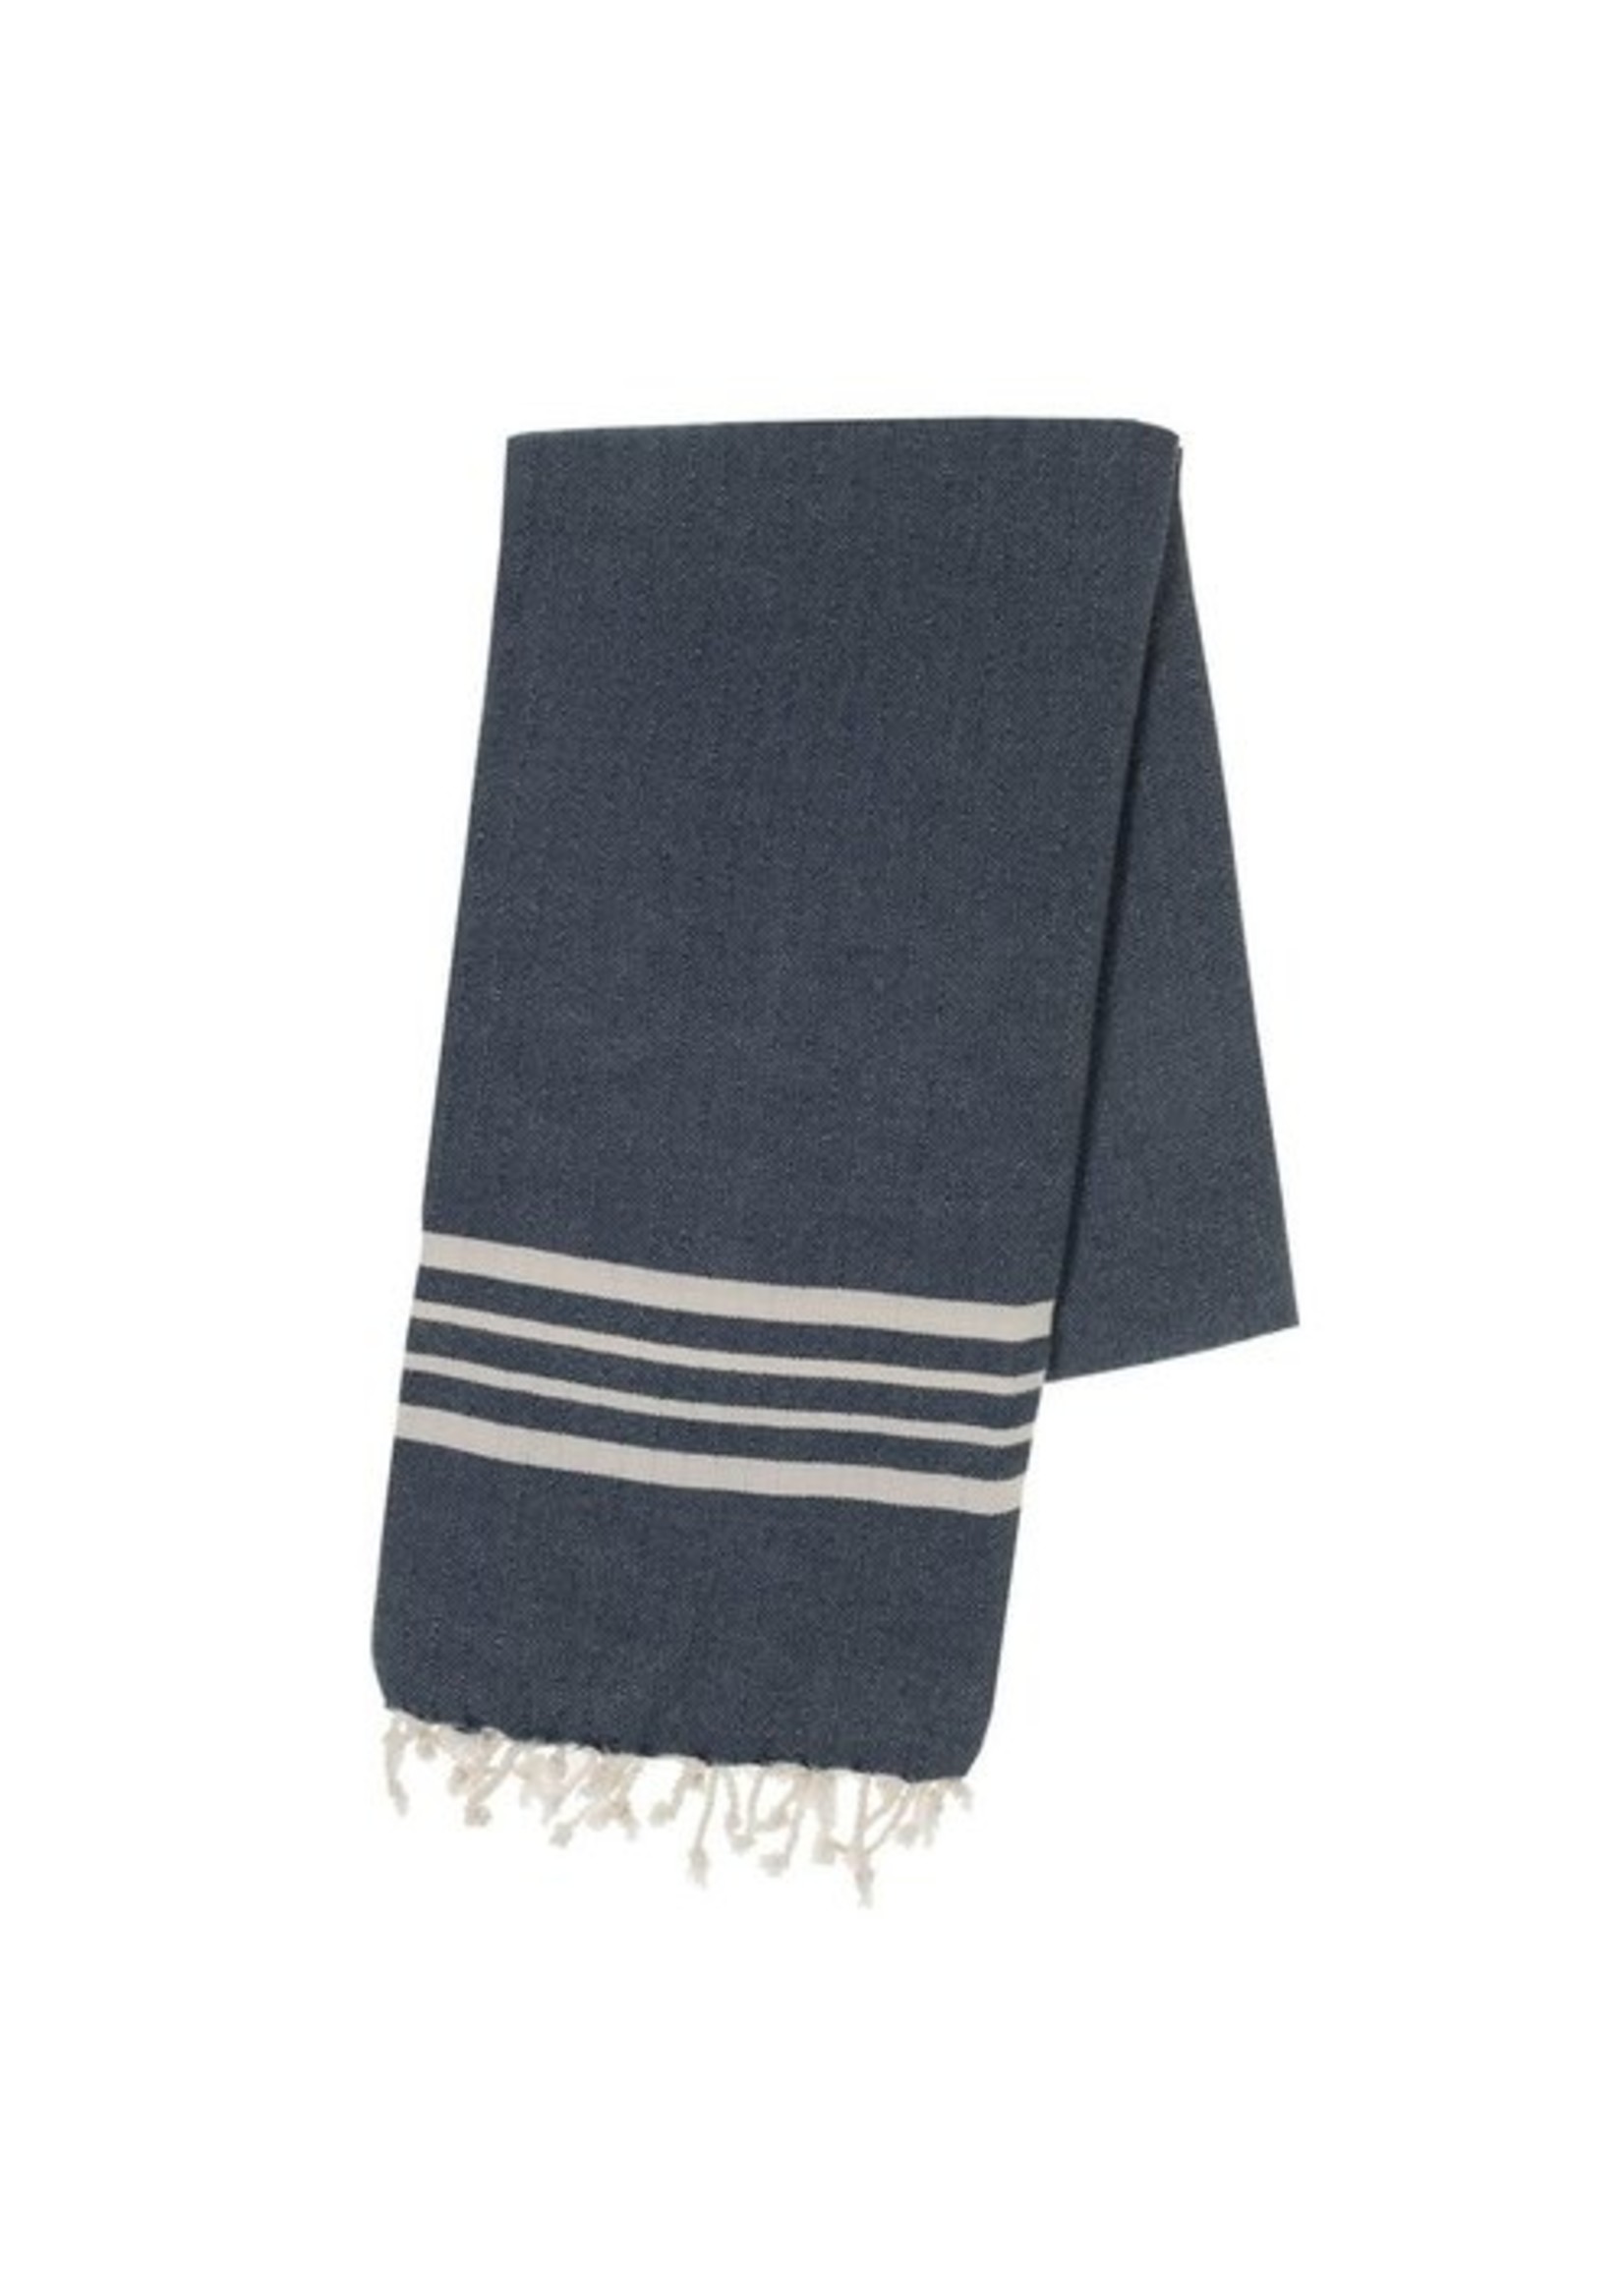 Lalay Hammam towel navy blue 4 stripes 180 x 100 cm